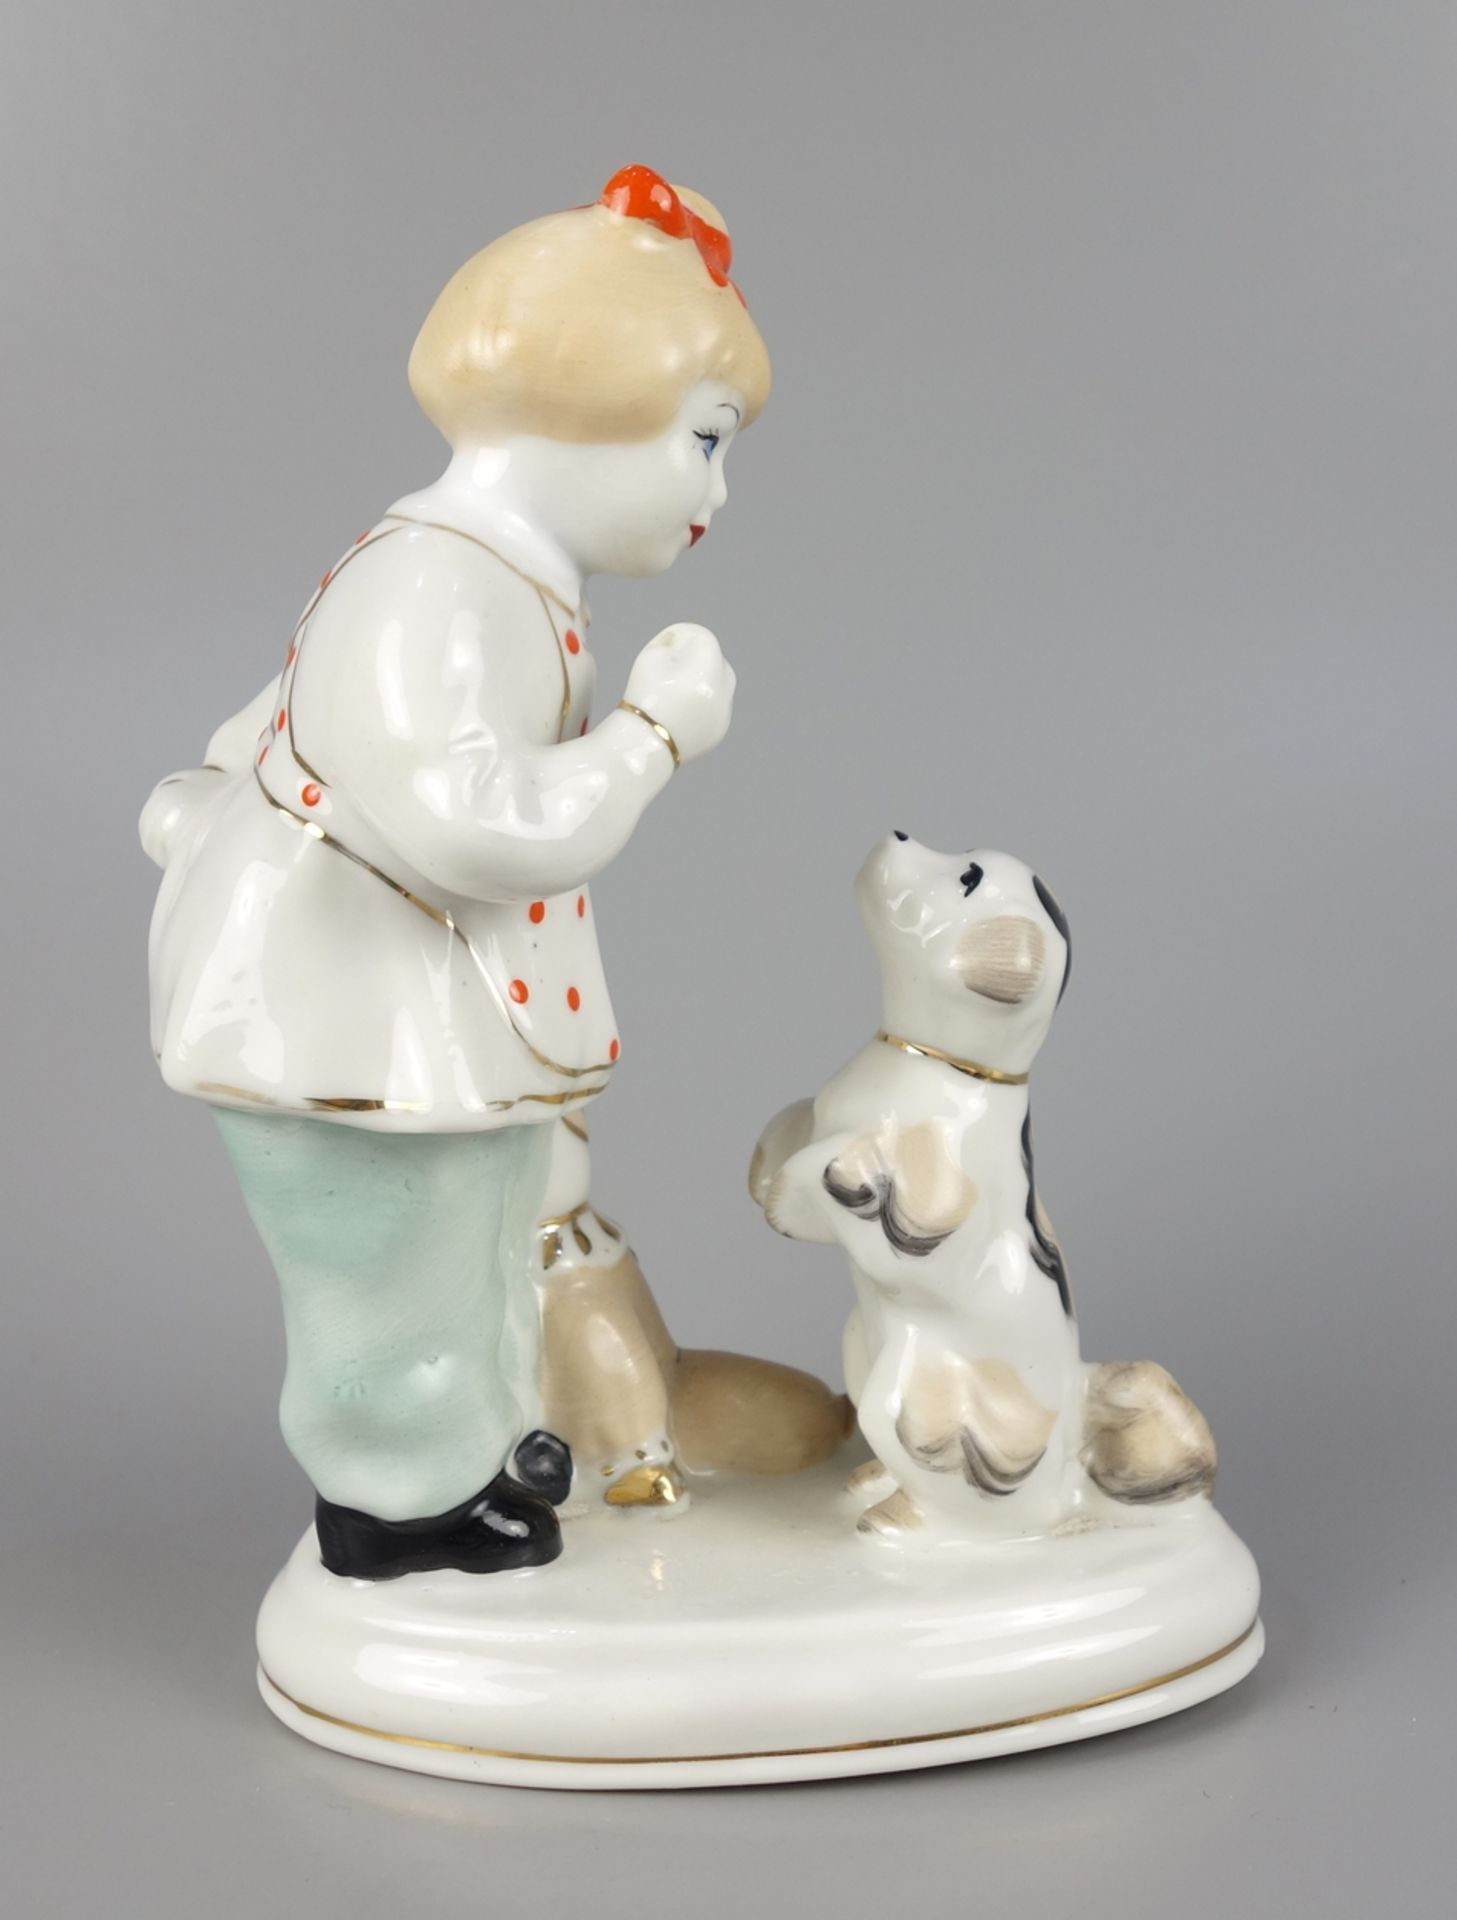 Porcelain figure "Educating a dog", Lomonosov, 2nd half 20th c. - Image 2 of 3